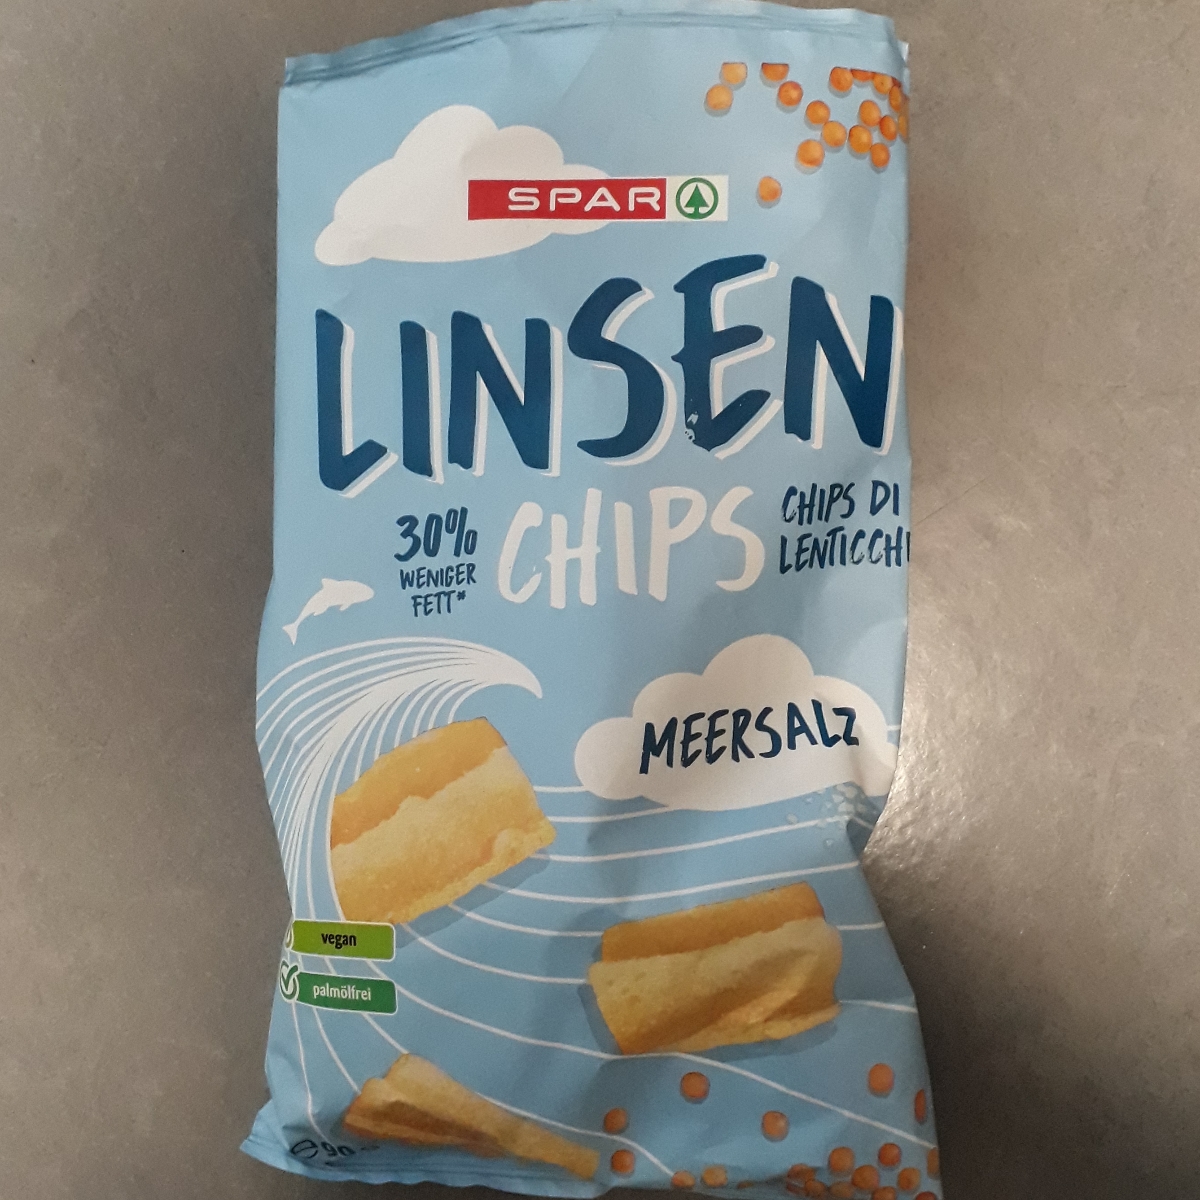 Spar Linsen Chips Meersalz Review